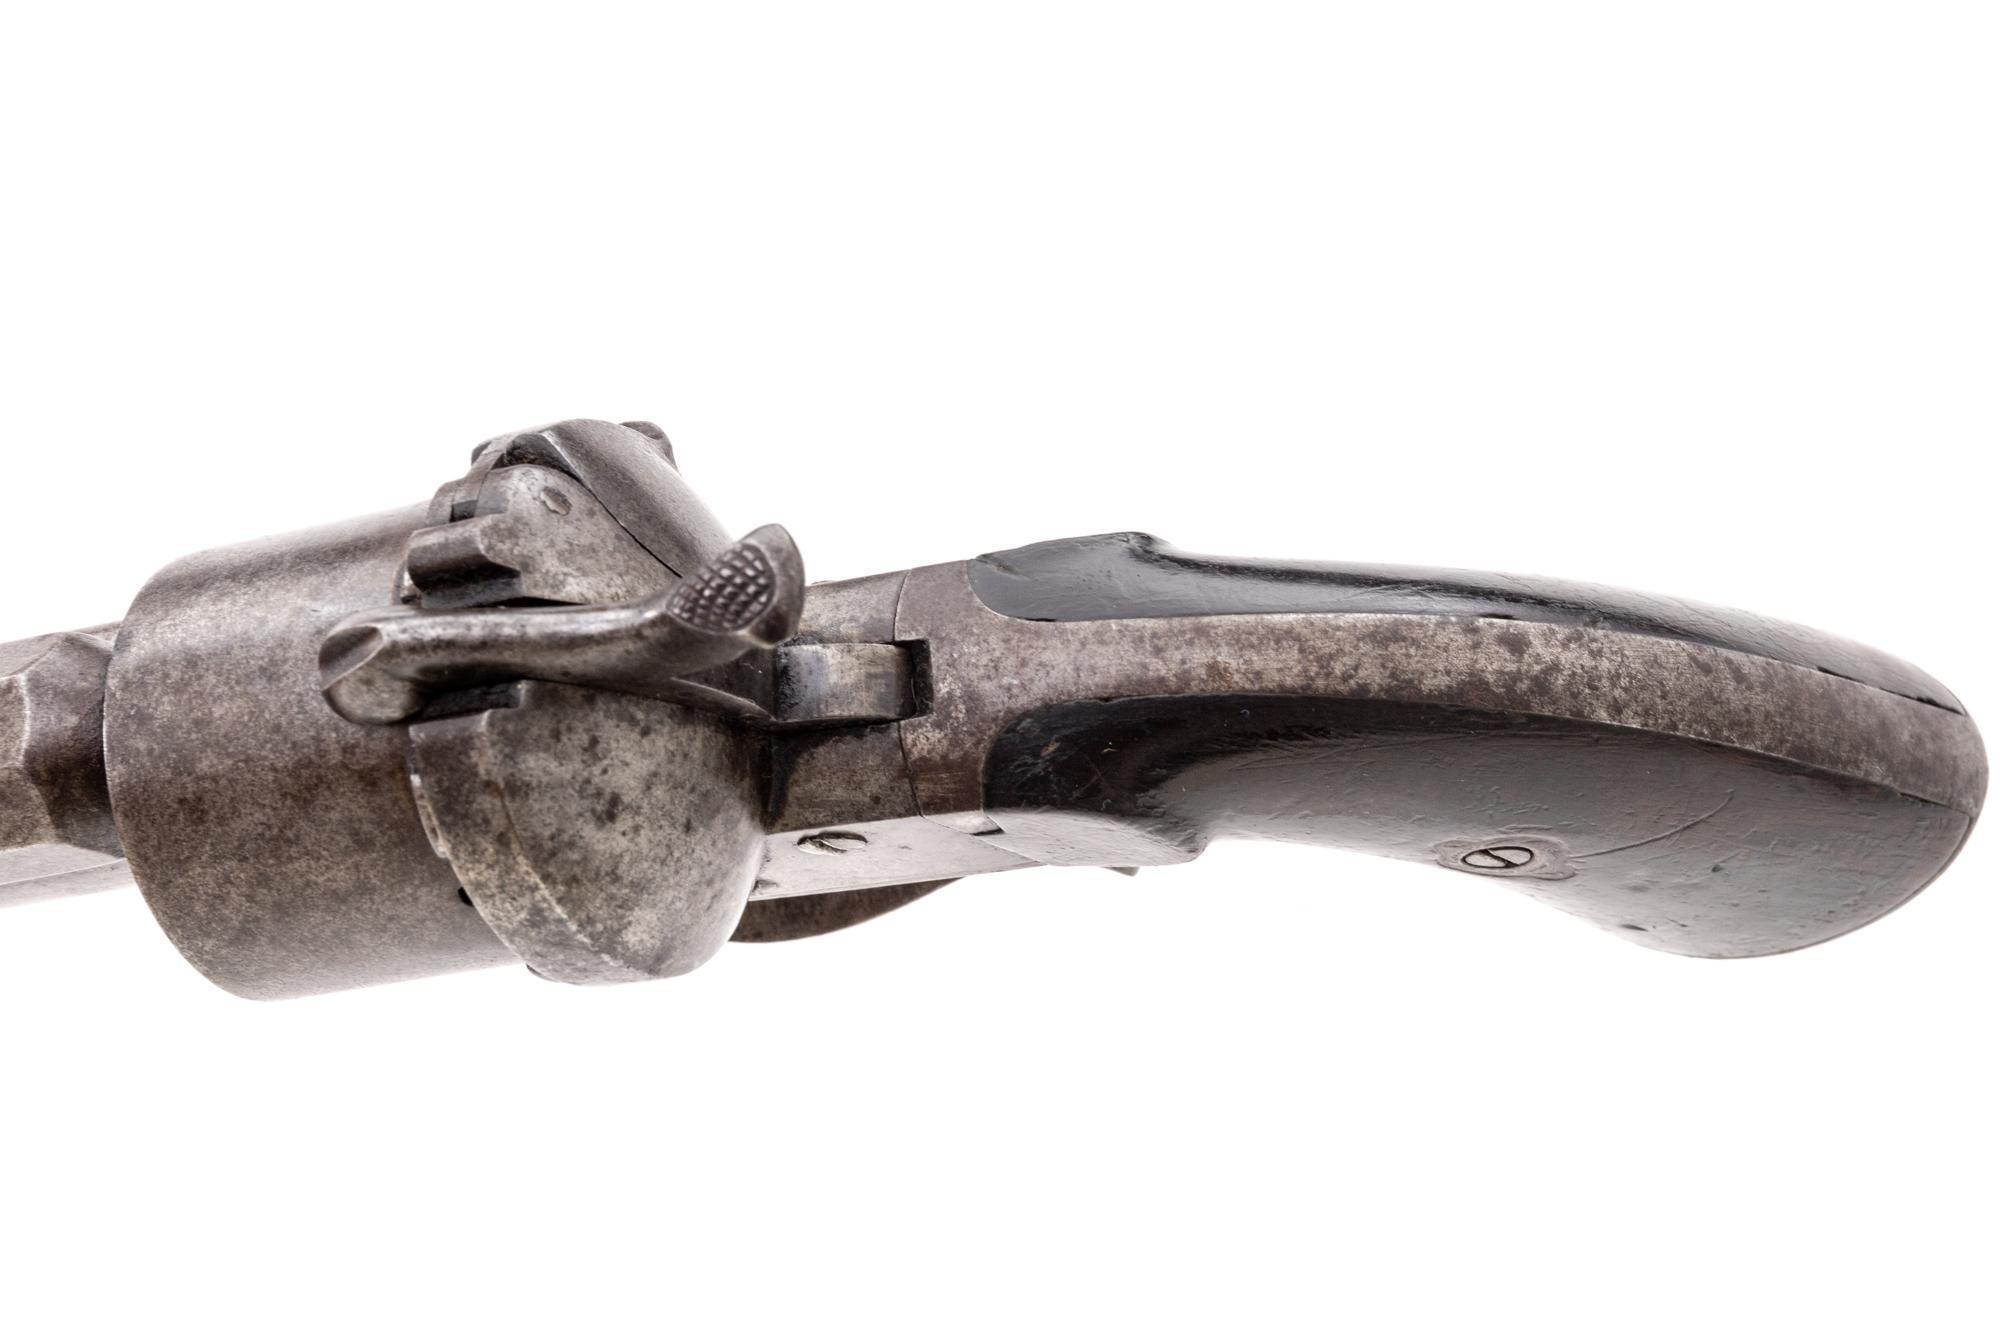 Civil War-Era Lefaucheux M-1854 Military Pinfire Revolver